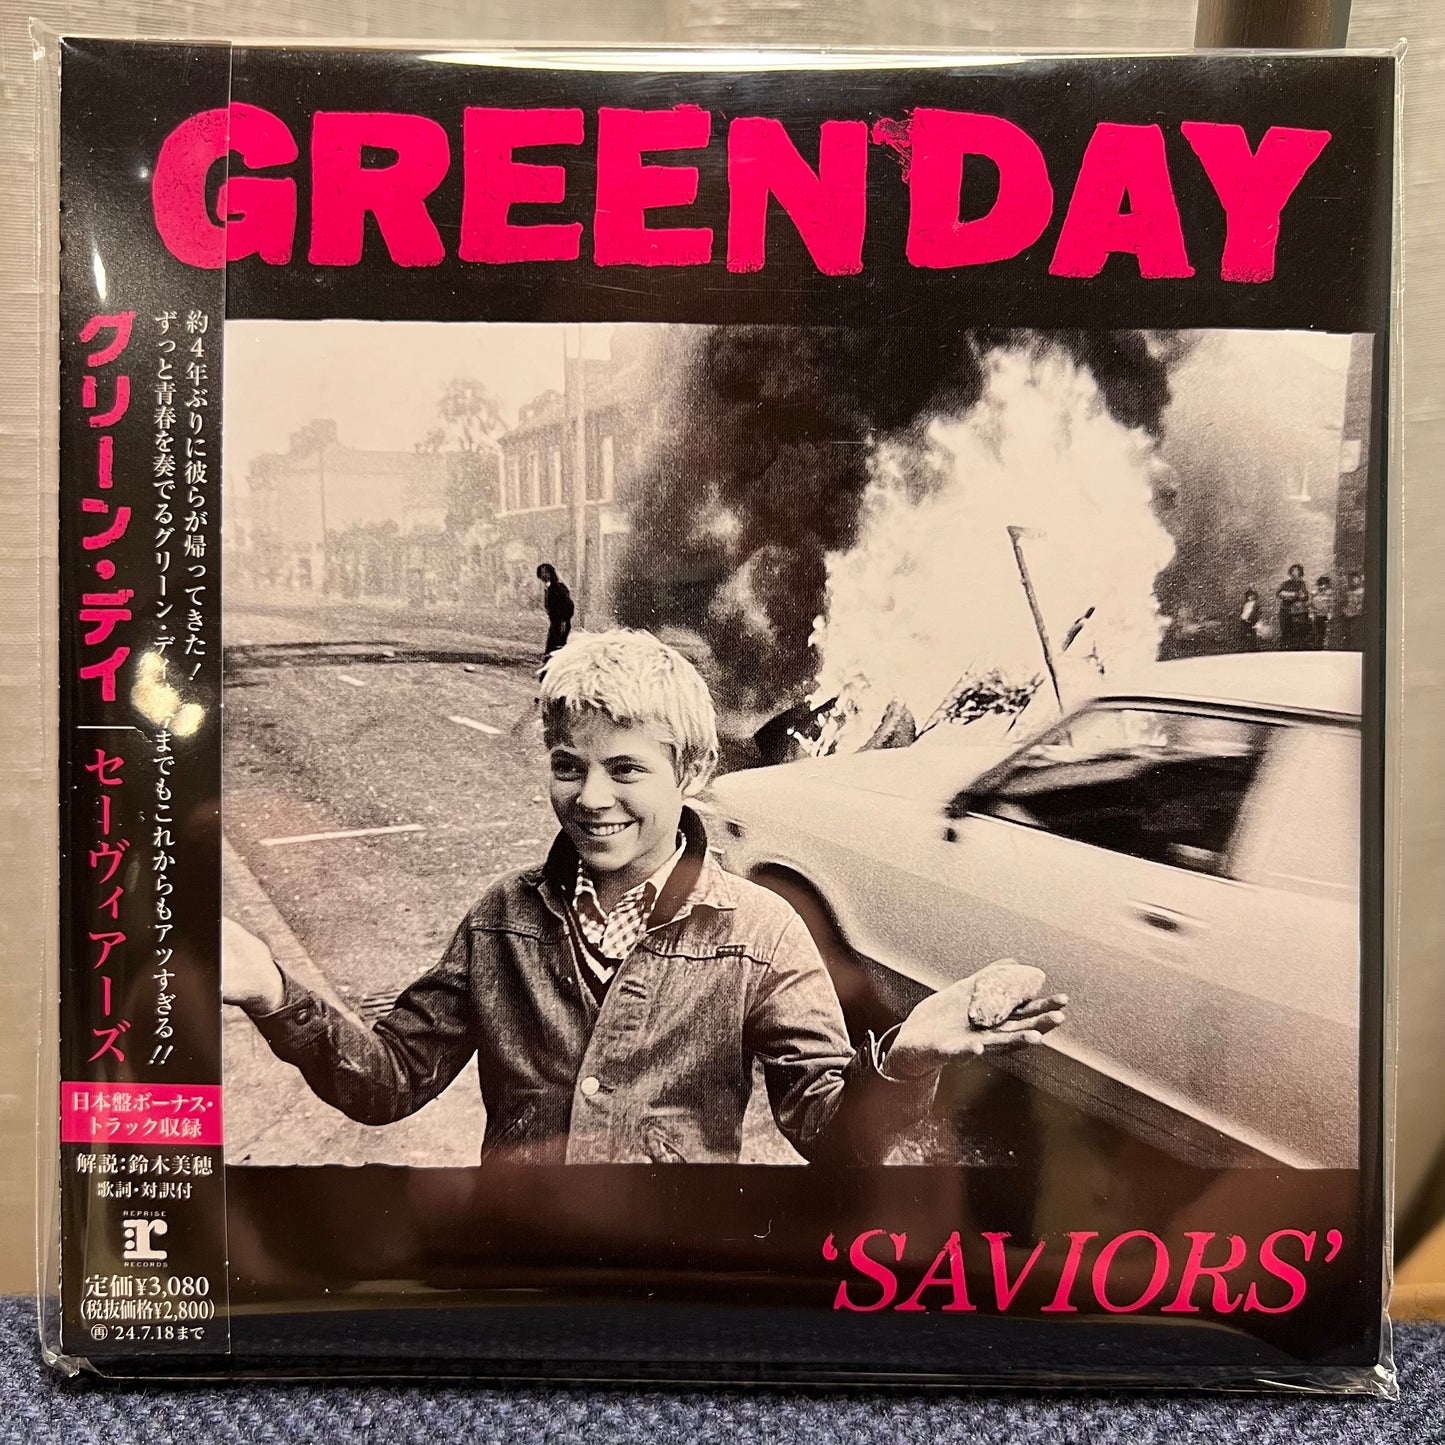 Green Day "Saviors" CD (Japanese Edition w/ Bonus Track)